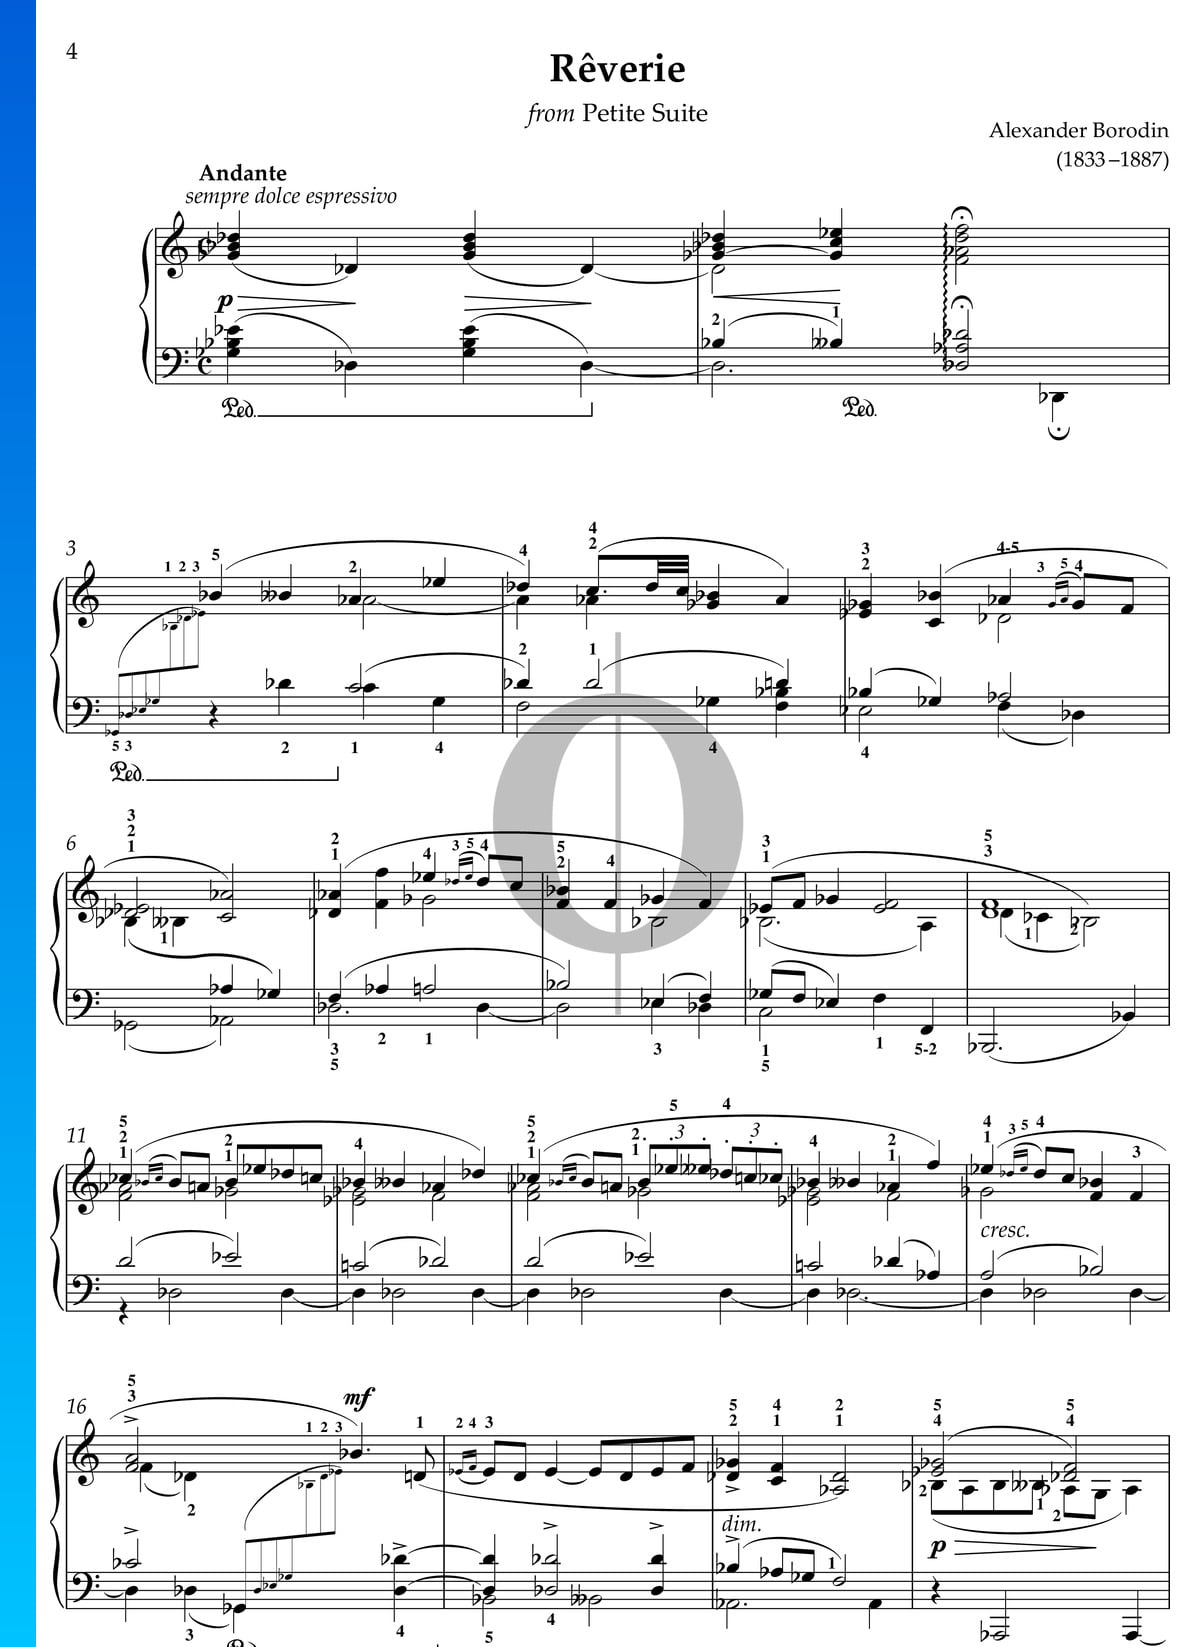 Petite Suite: 5. Reverie Sheet Music (Piano Solo) - OKTAV